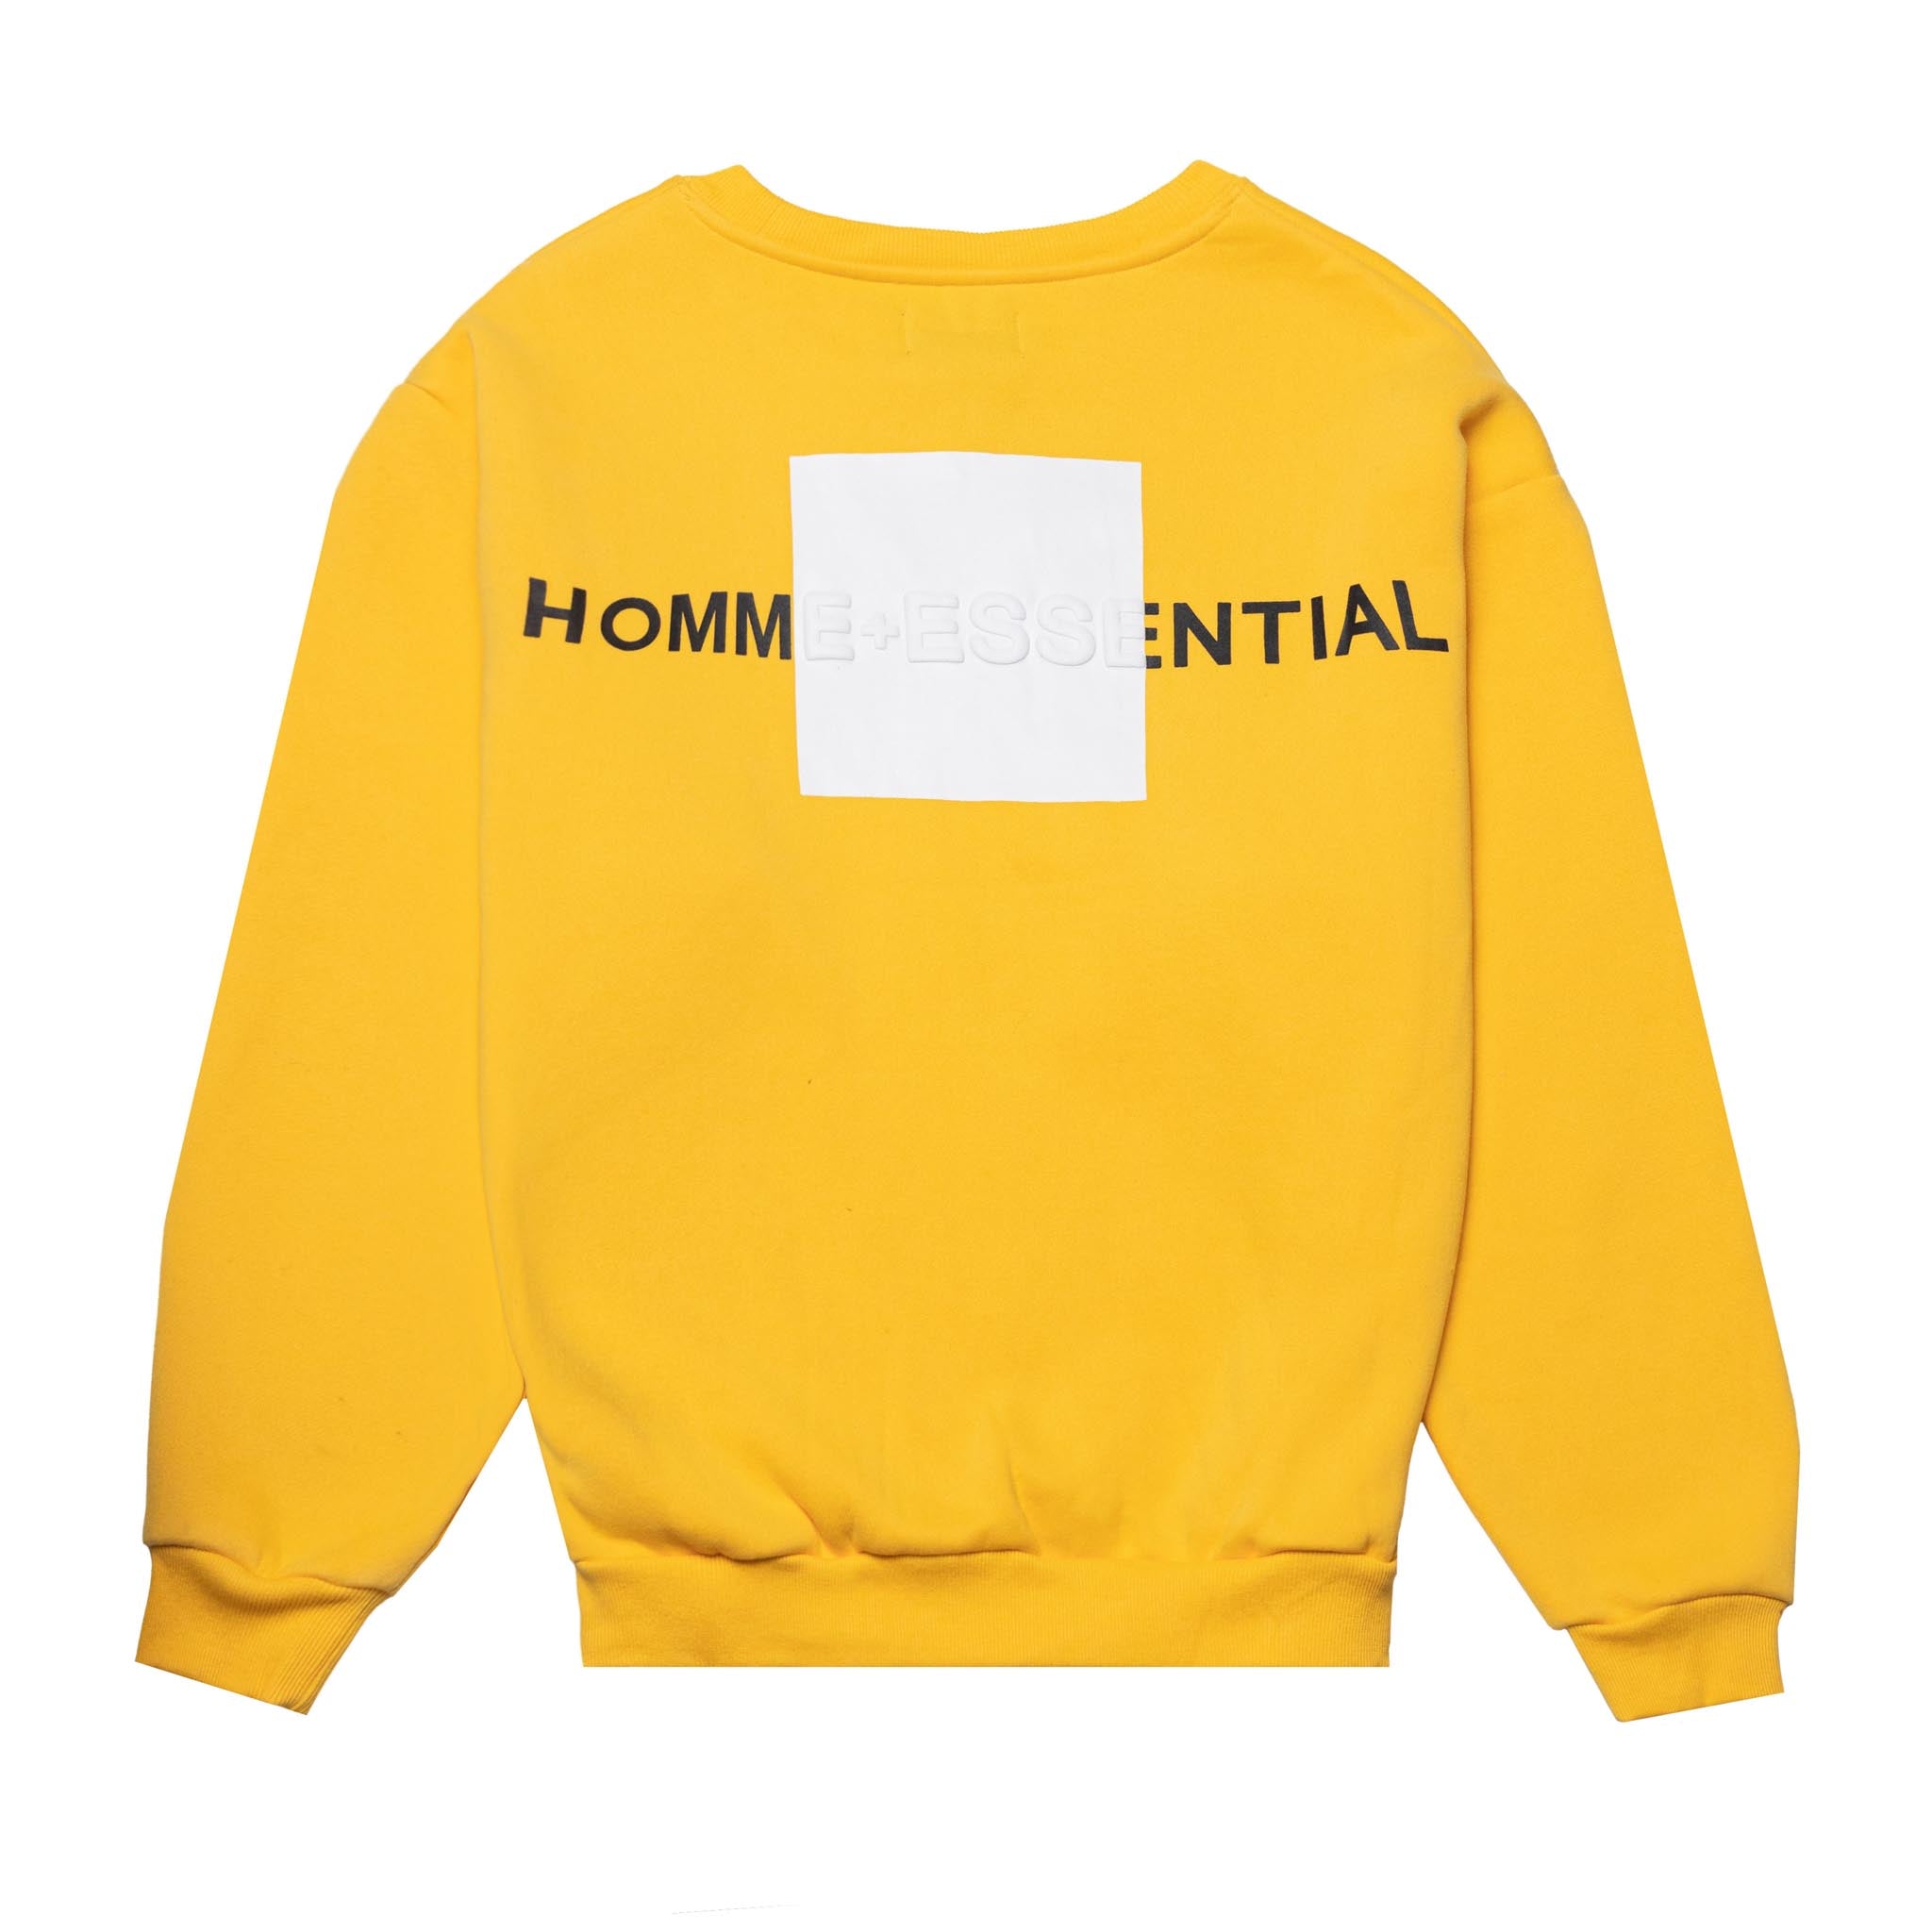 HOMME+ 'ESSENTIAL' Box Crewneck Yellow